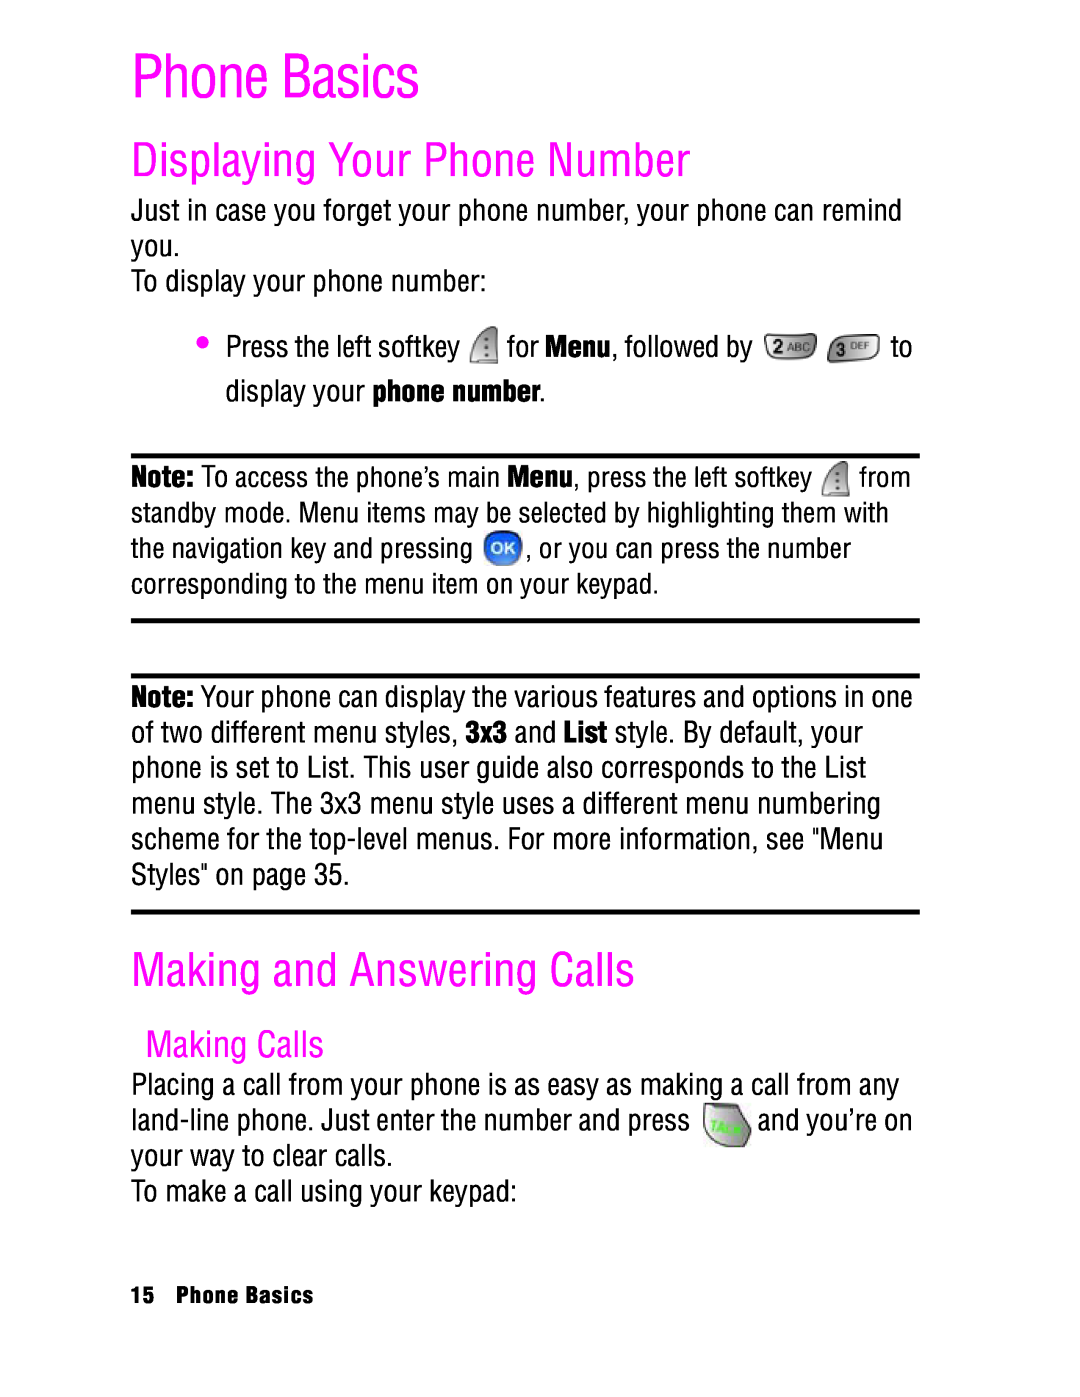 Samsung SPH-a740 manual Phone Basics, Displaying Your Phone Number, Making and Answering Calls, Making Calls 